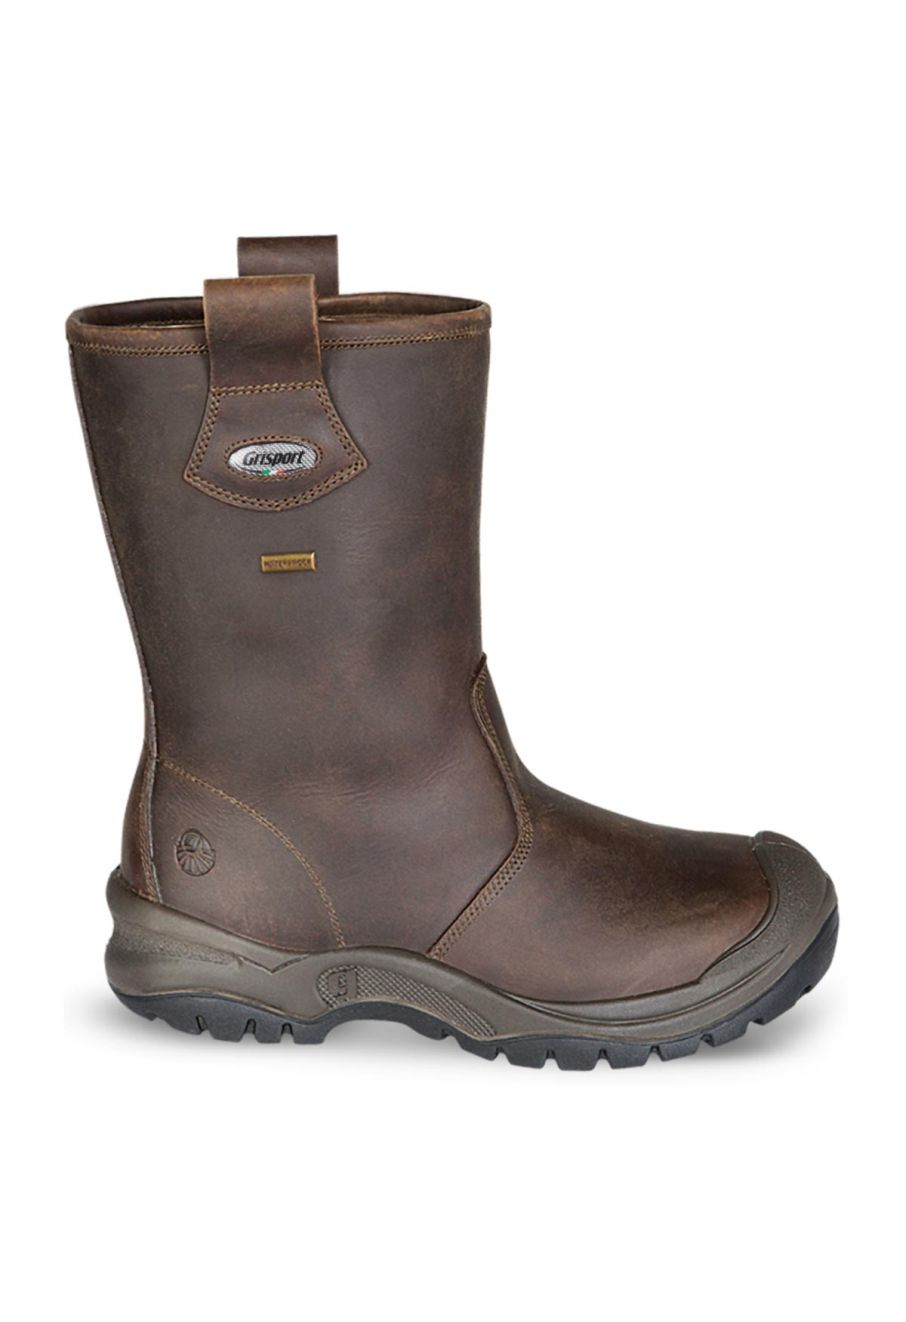 Grisport 70249C S3 Work Boots - Brown